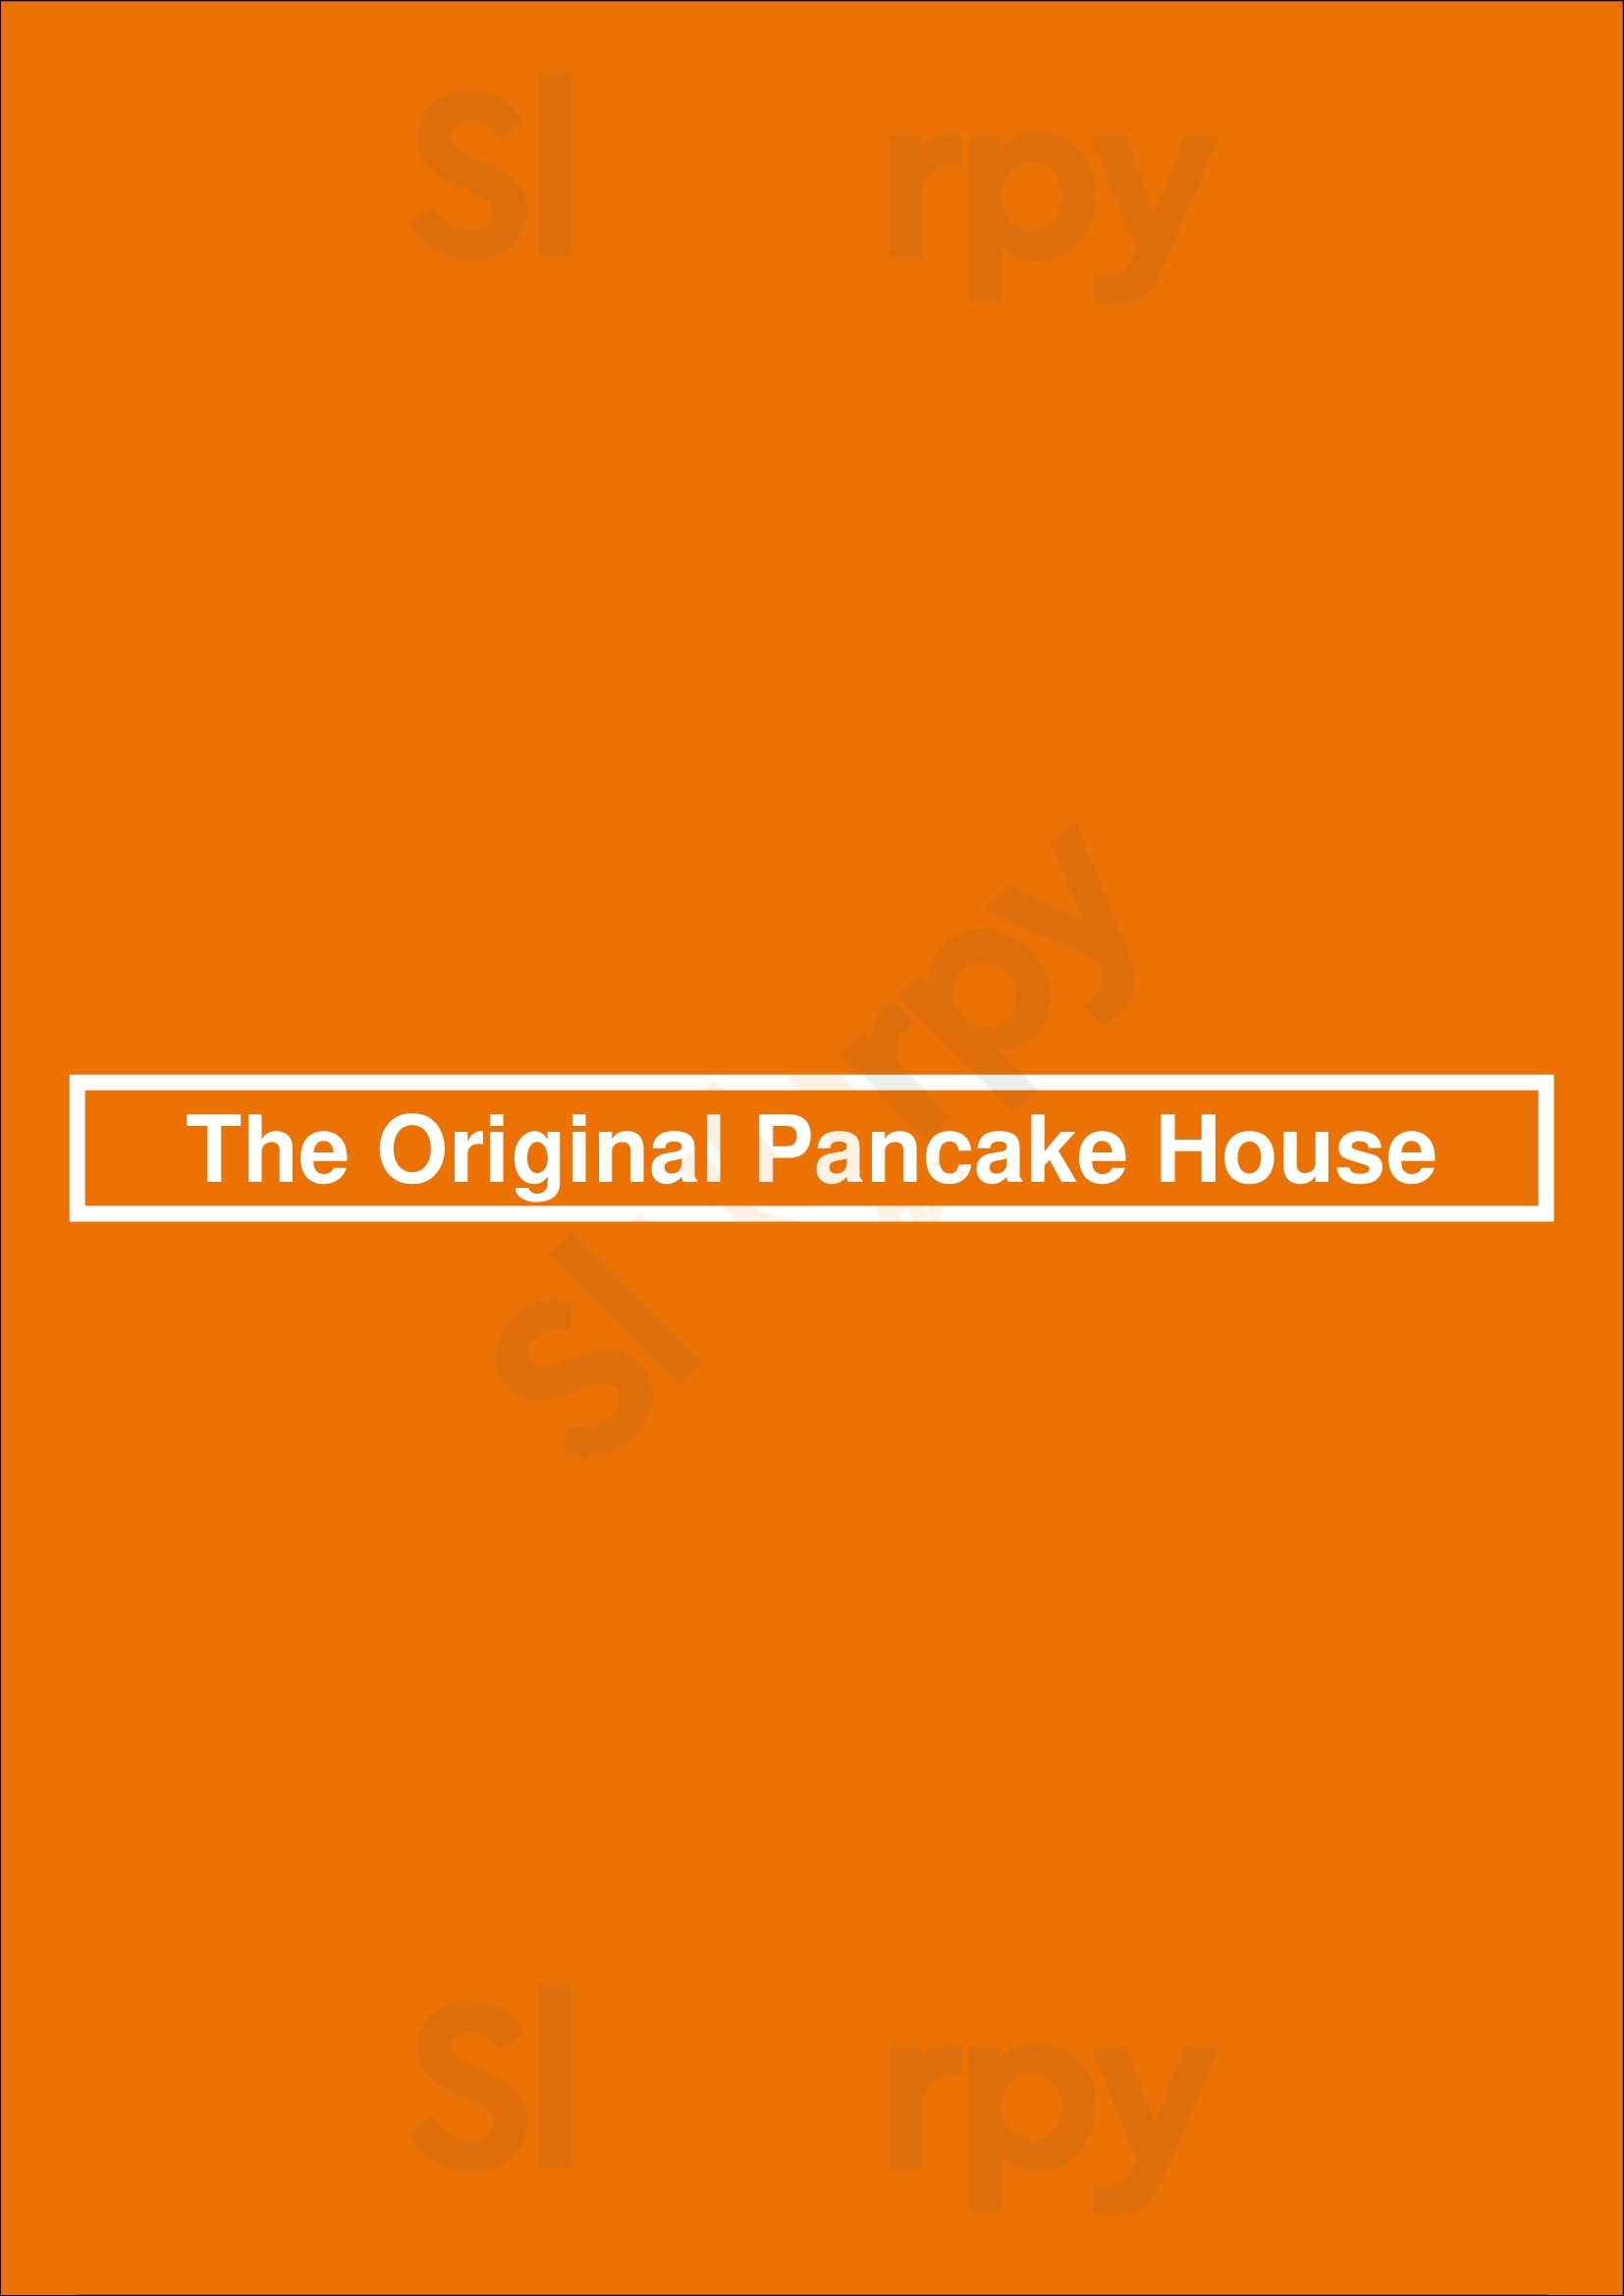 The Original Pancake House Winnipeg Menu - 1